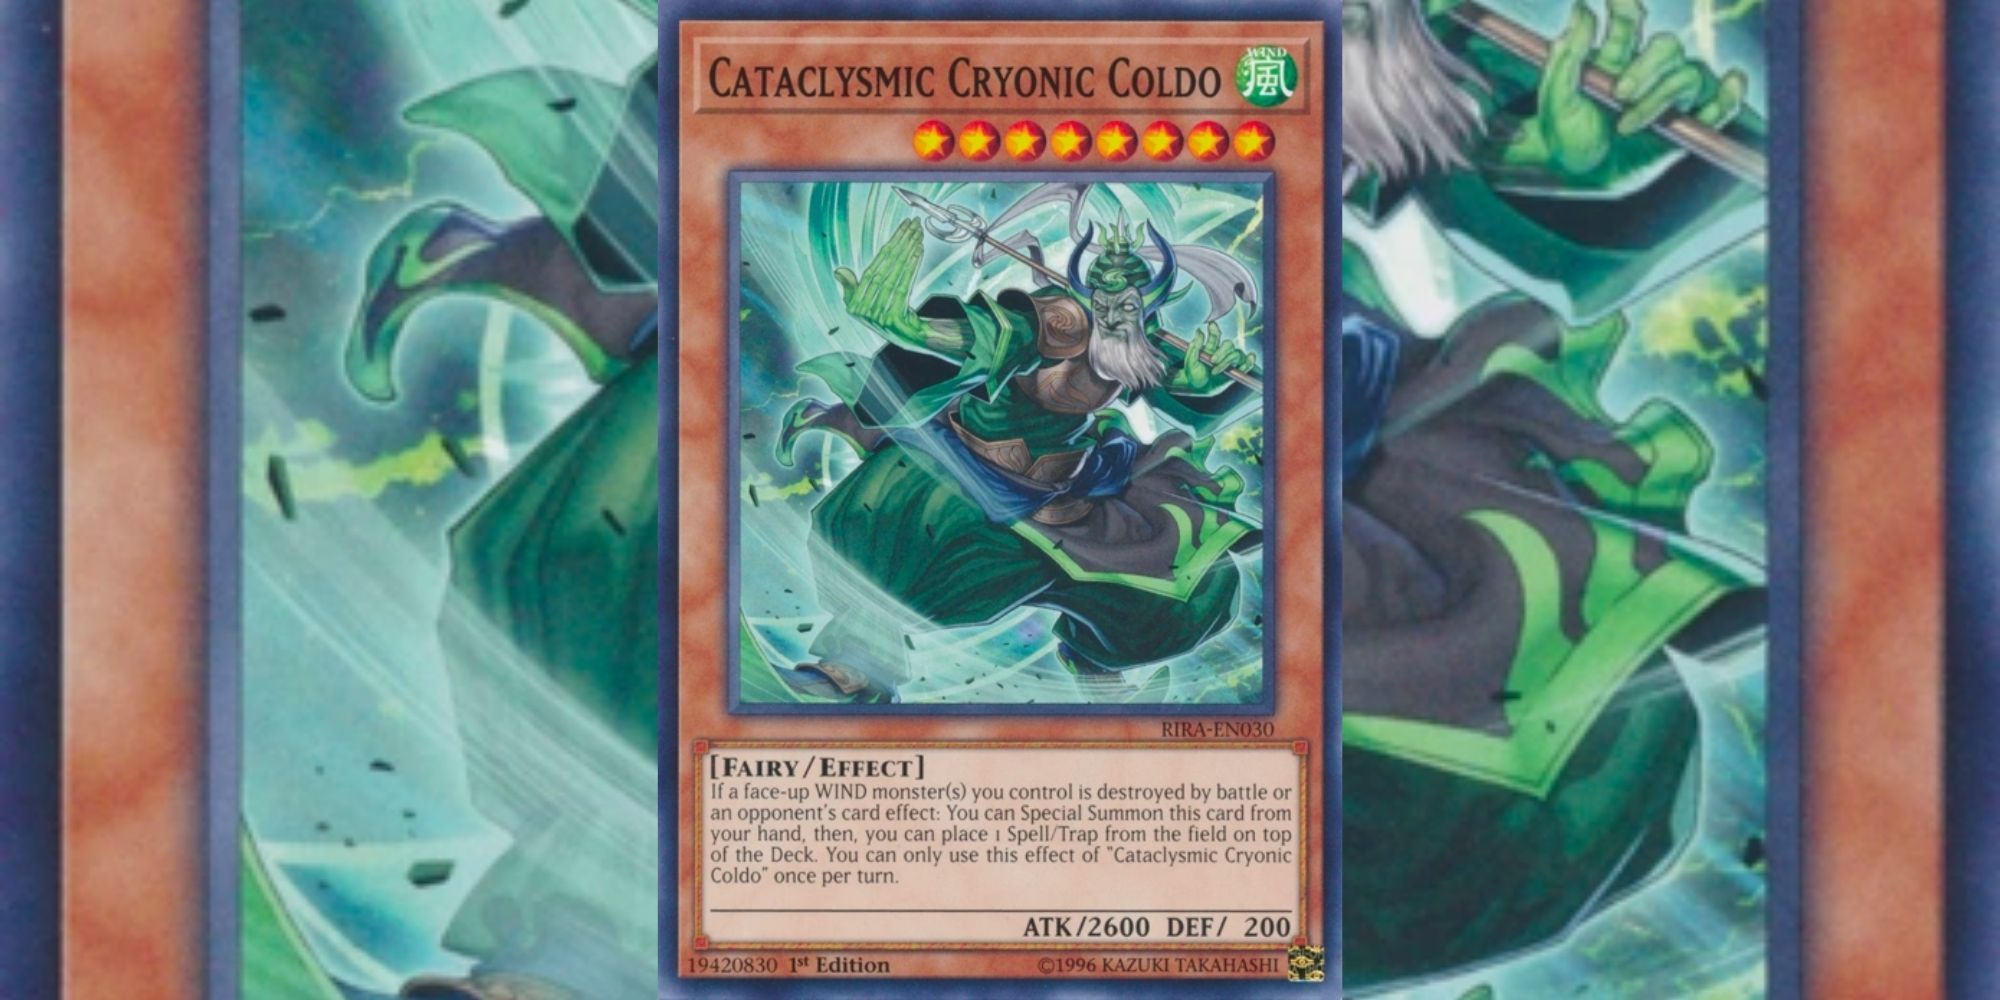 Cataclysmic Cryonic Coldo card in Yu-Gi-Oh!